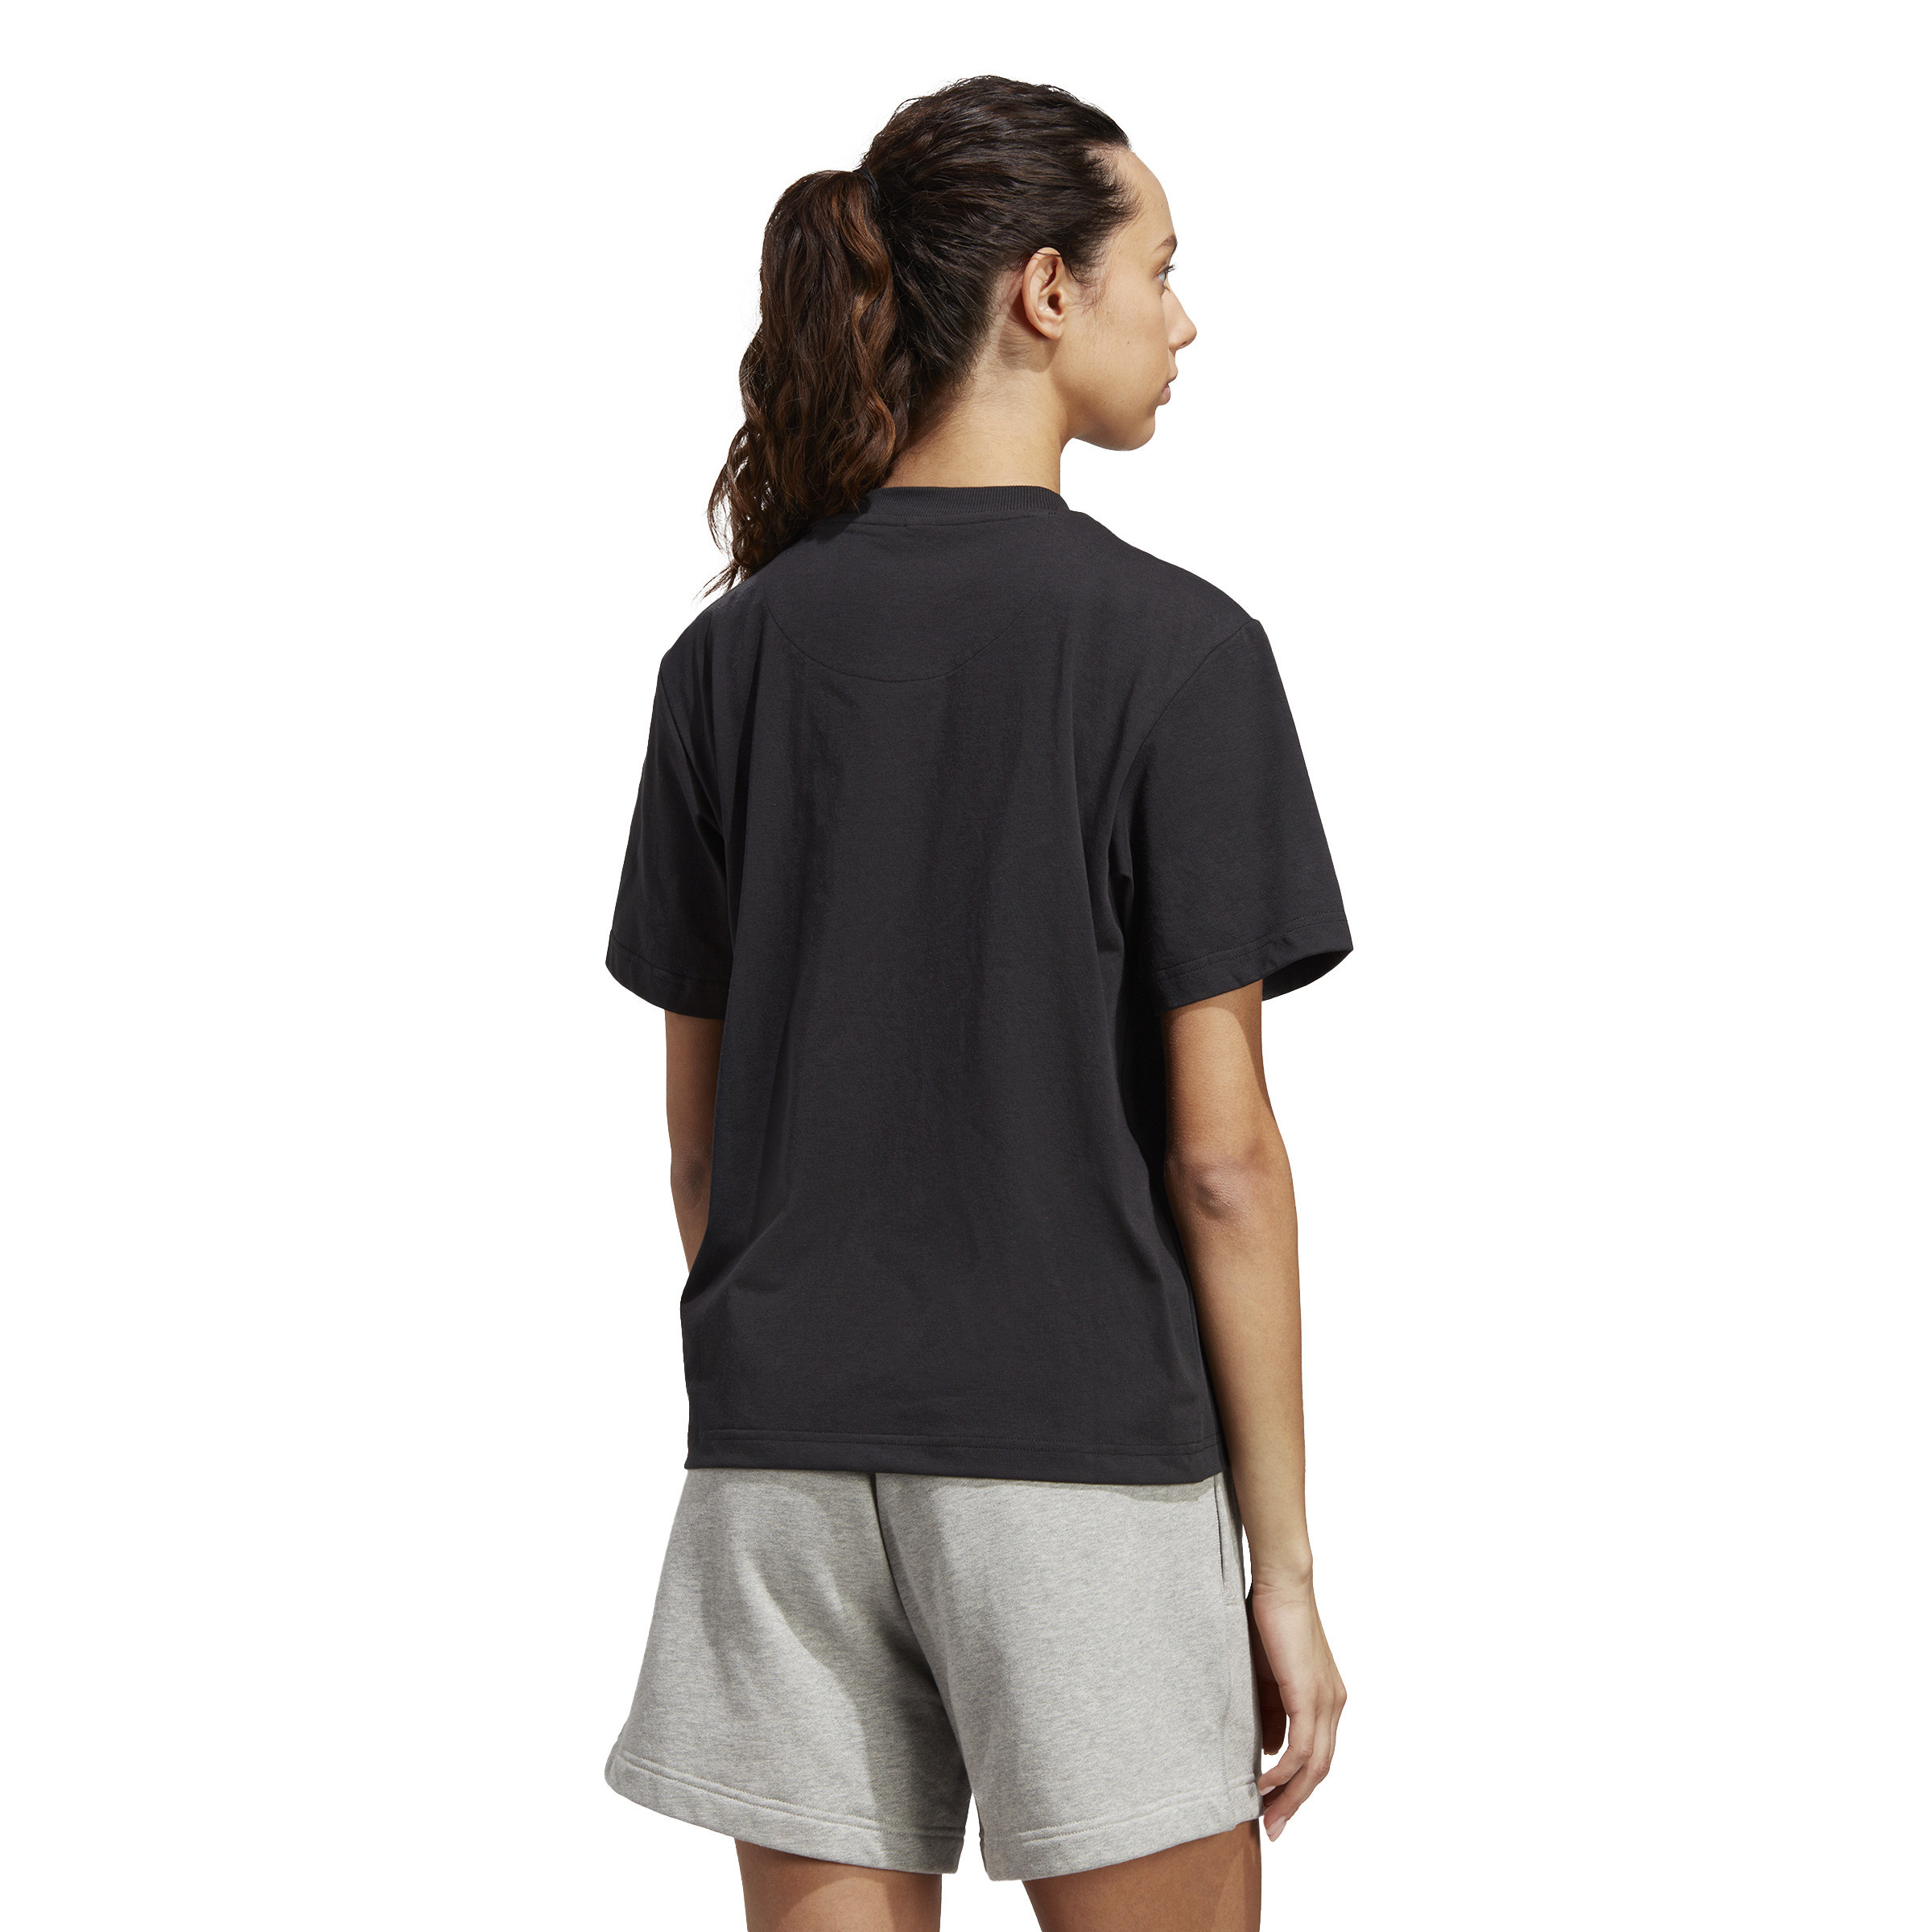 Adidas by Stella McCartney - TrueCasuals Regular Sportswear T-Shirt, Black, large image number 2